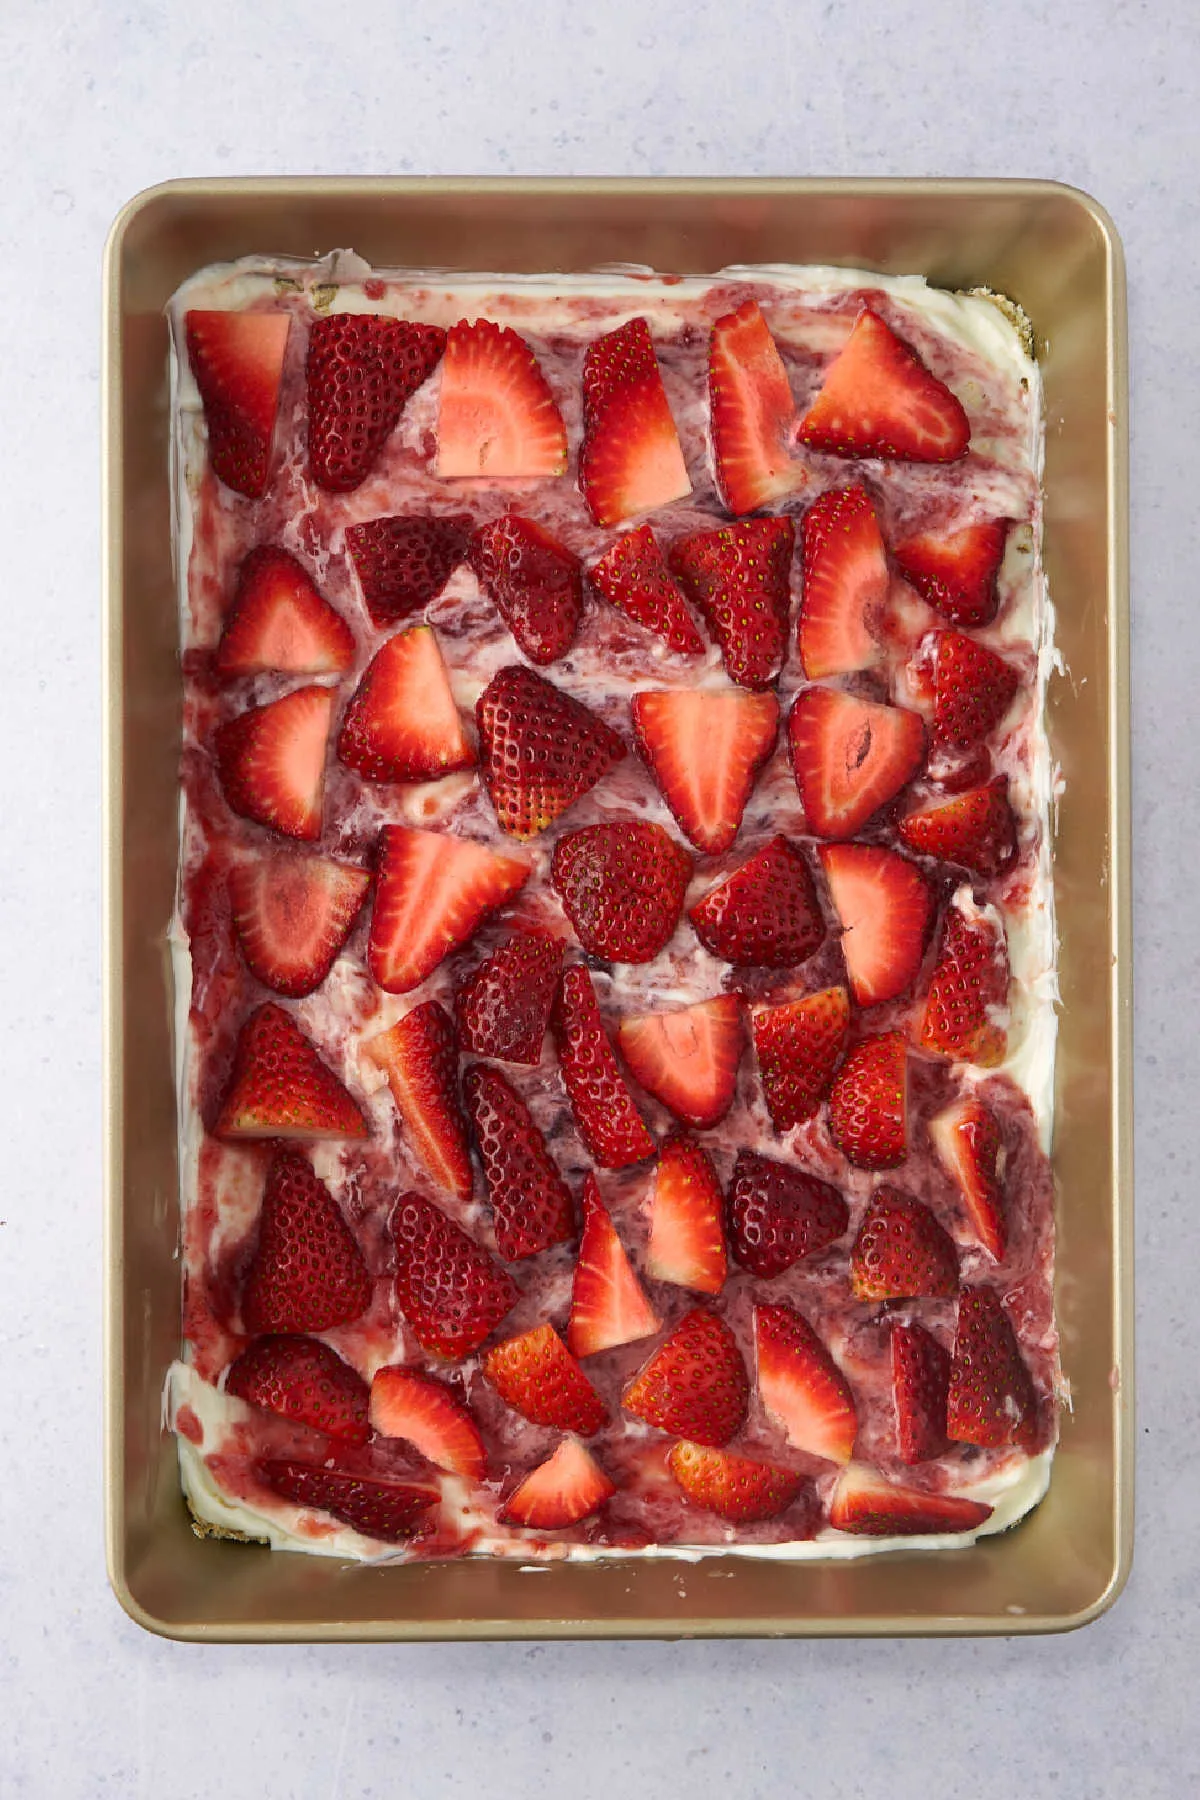 Fresh strawberry slices over yogurt and jam mixture in pan.